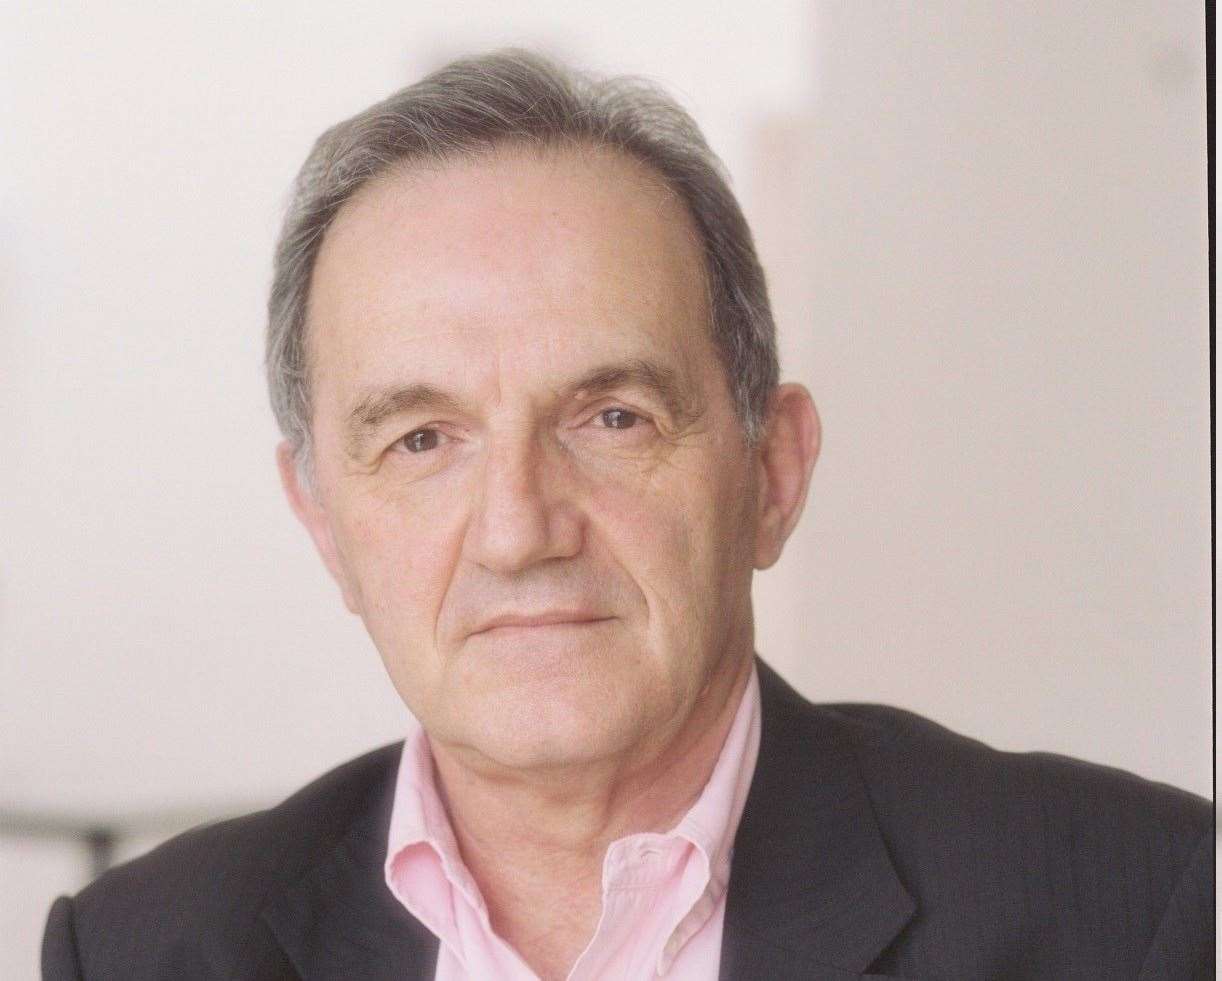 RiverOak spokesman Tony Freudman, who was chief executive of Manston Airport from 1997 to 2004